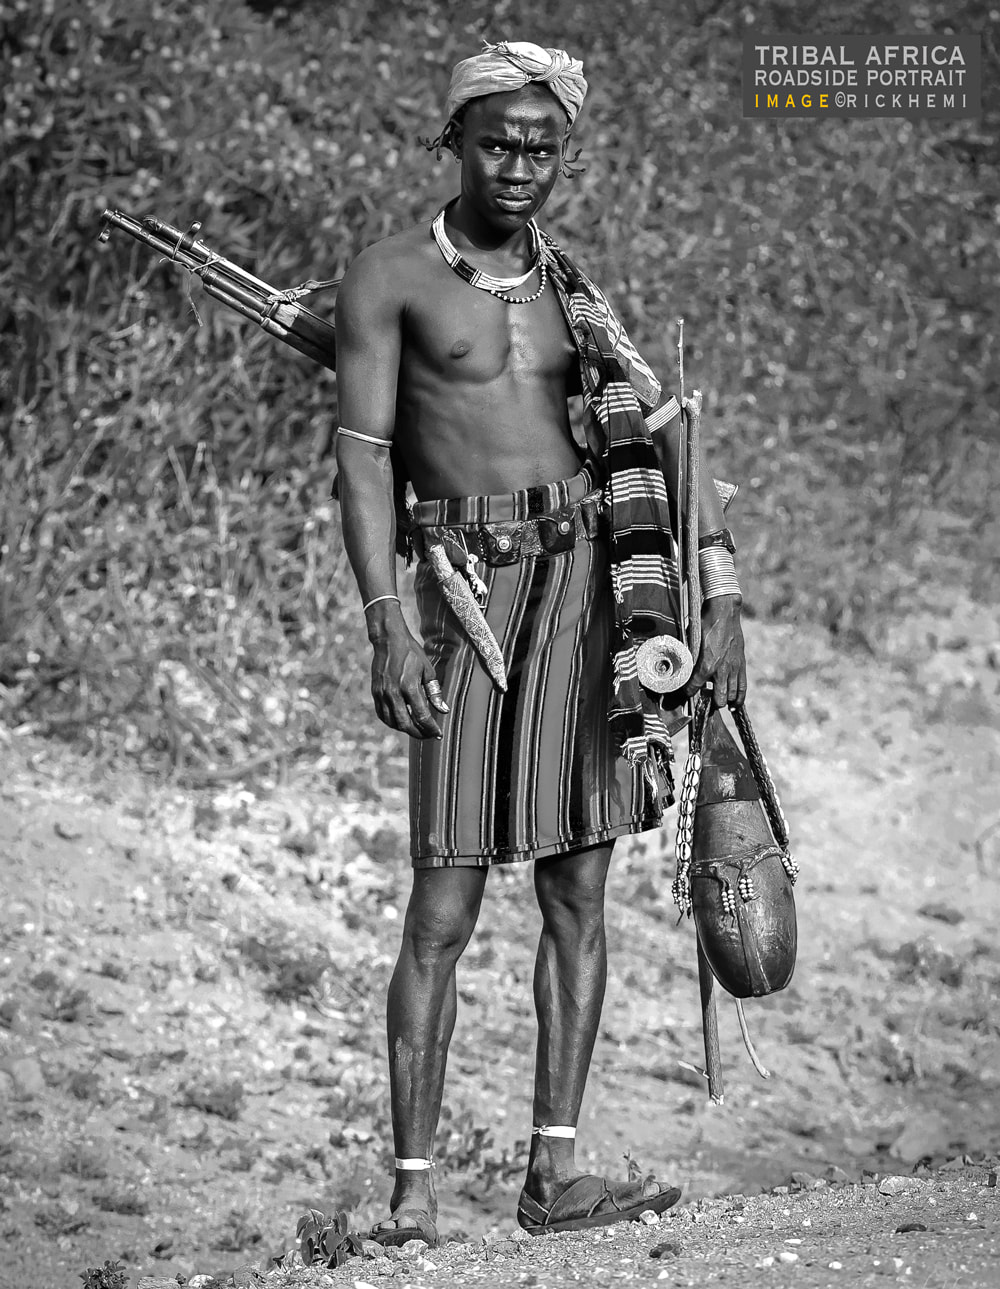  tribal lands Africa, about page Rick Hemi, image by Rick Hemi 